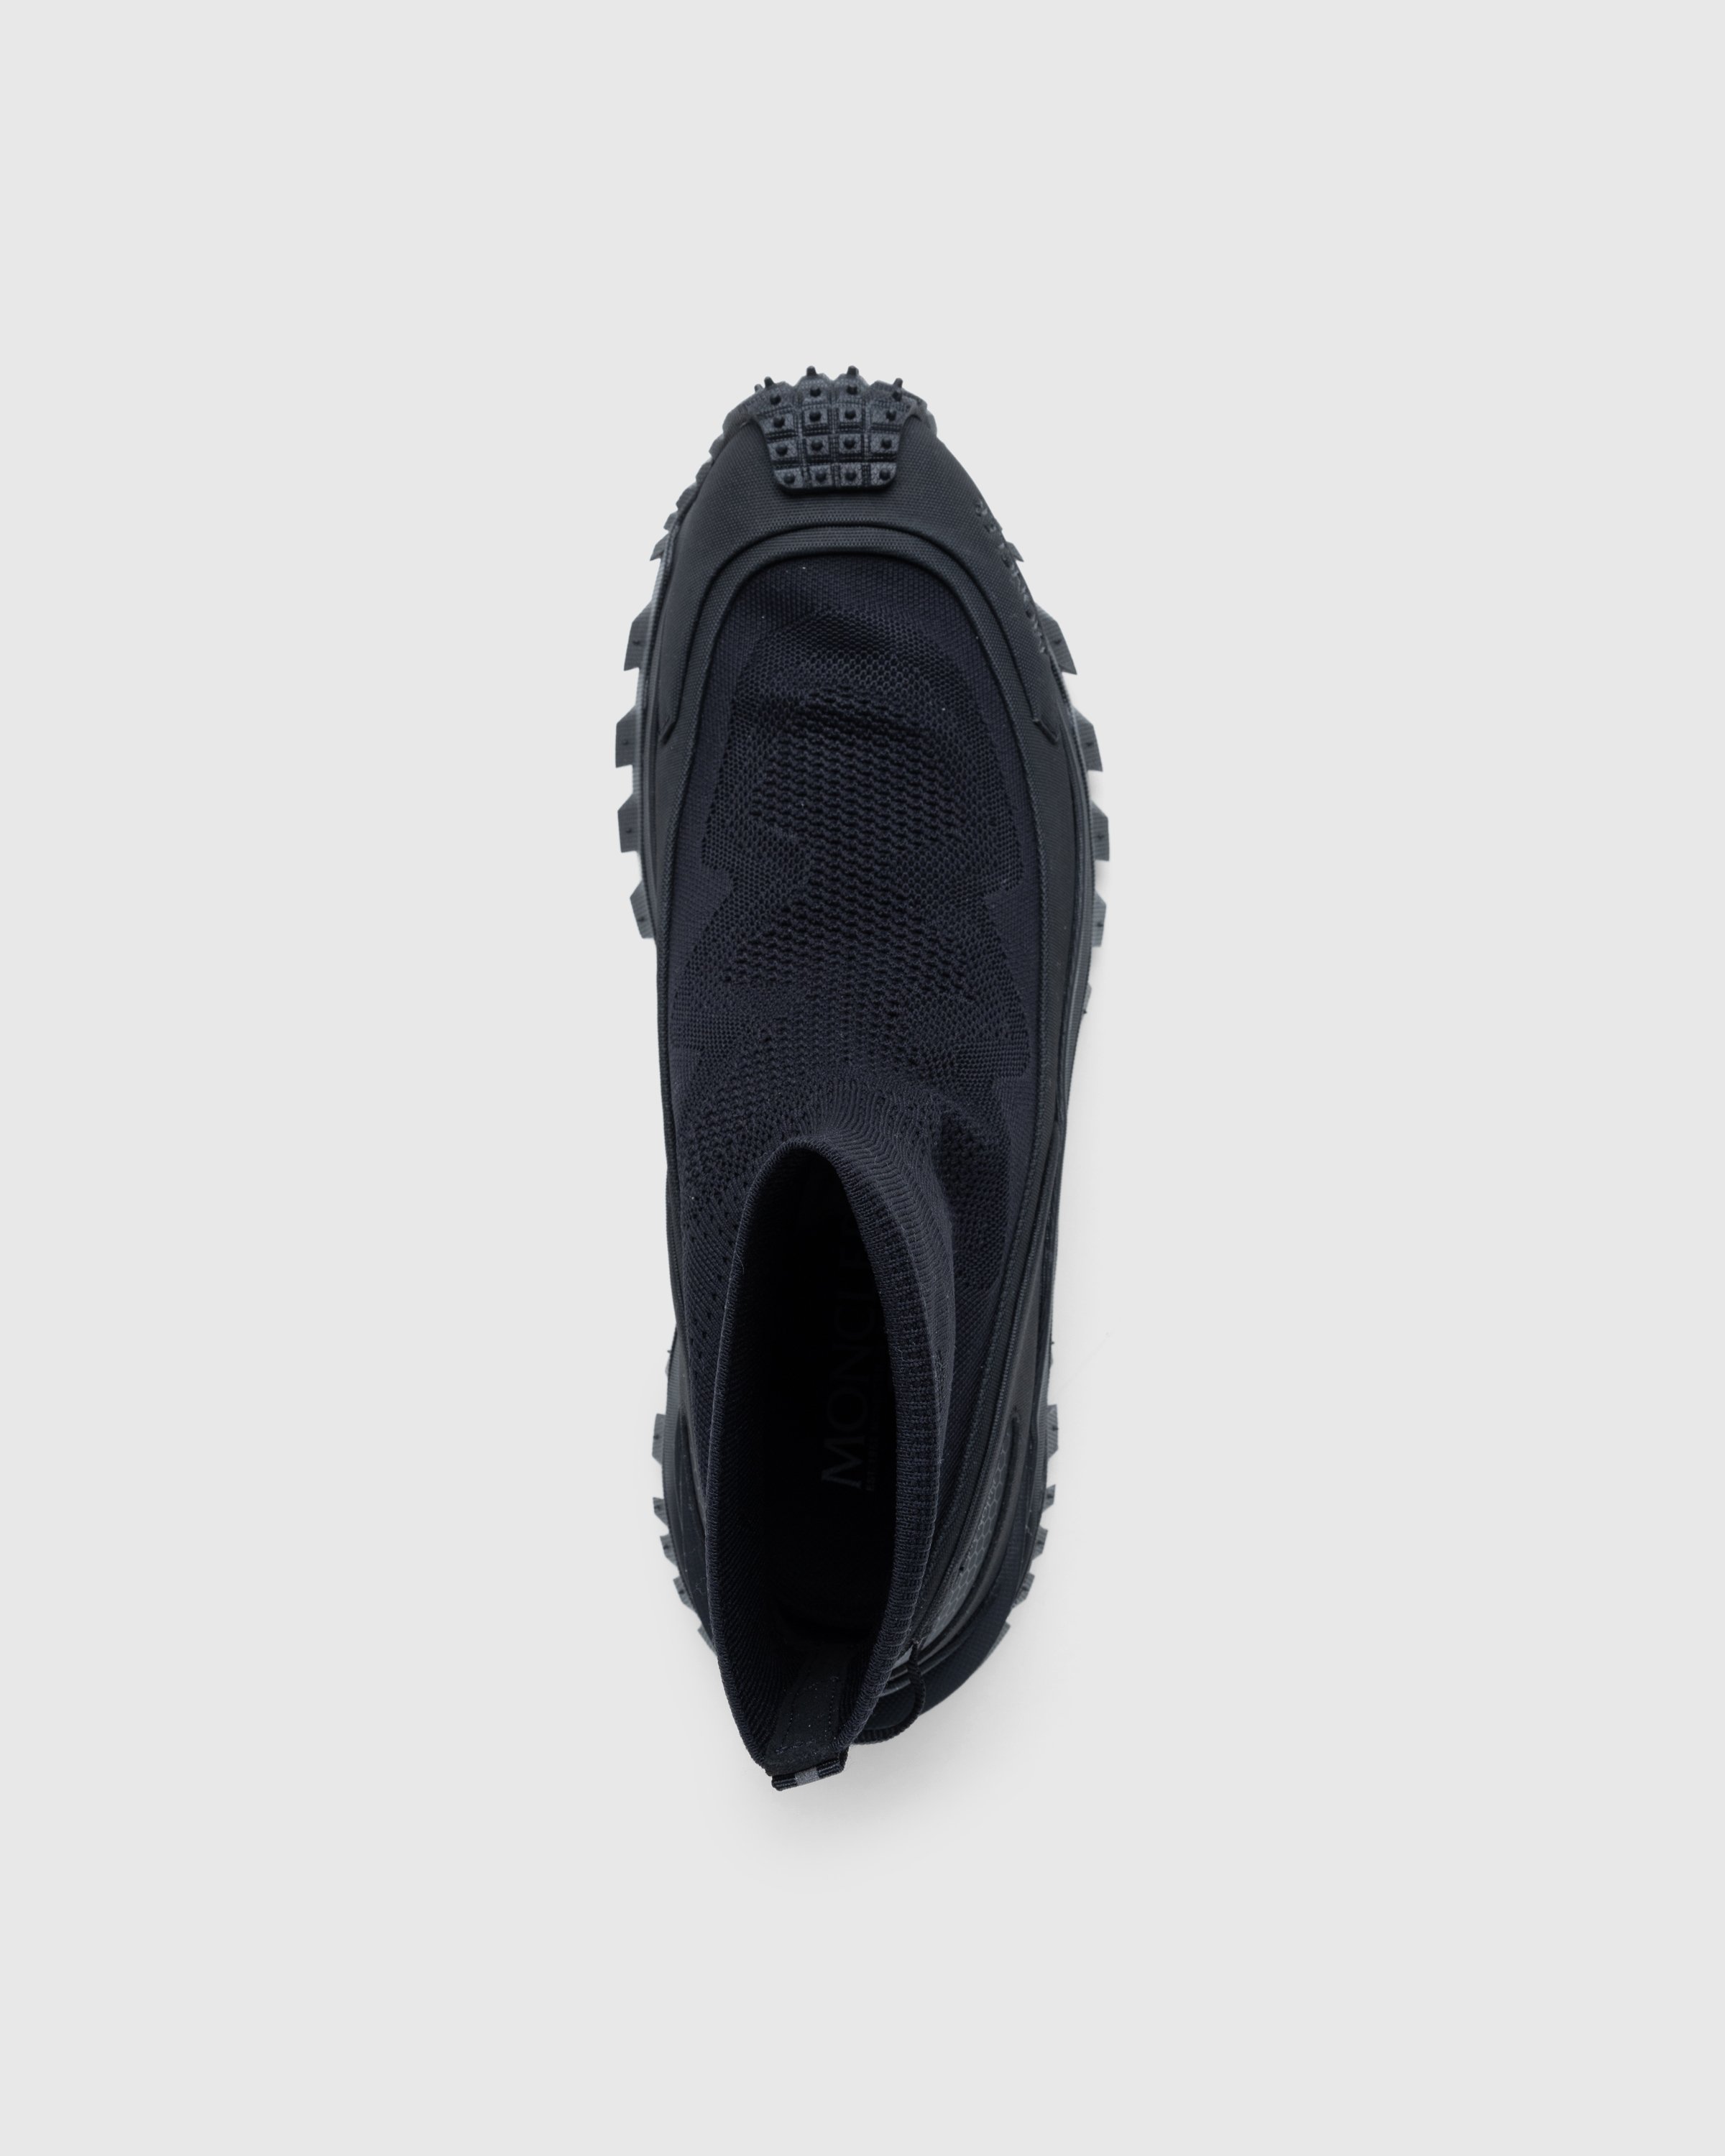 Moncler - Trailgrip Knit High Top Sneakers Black - Footwear - Black - Image 5